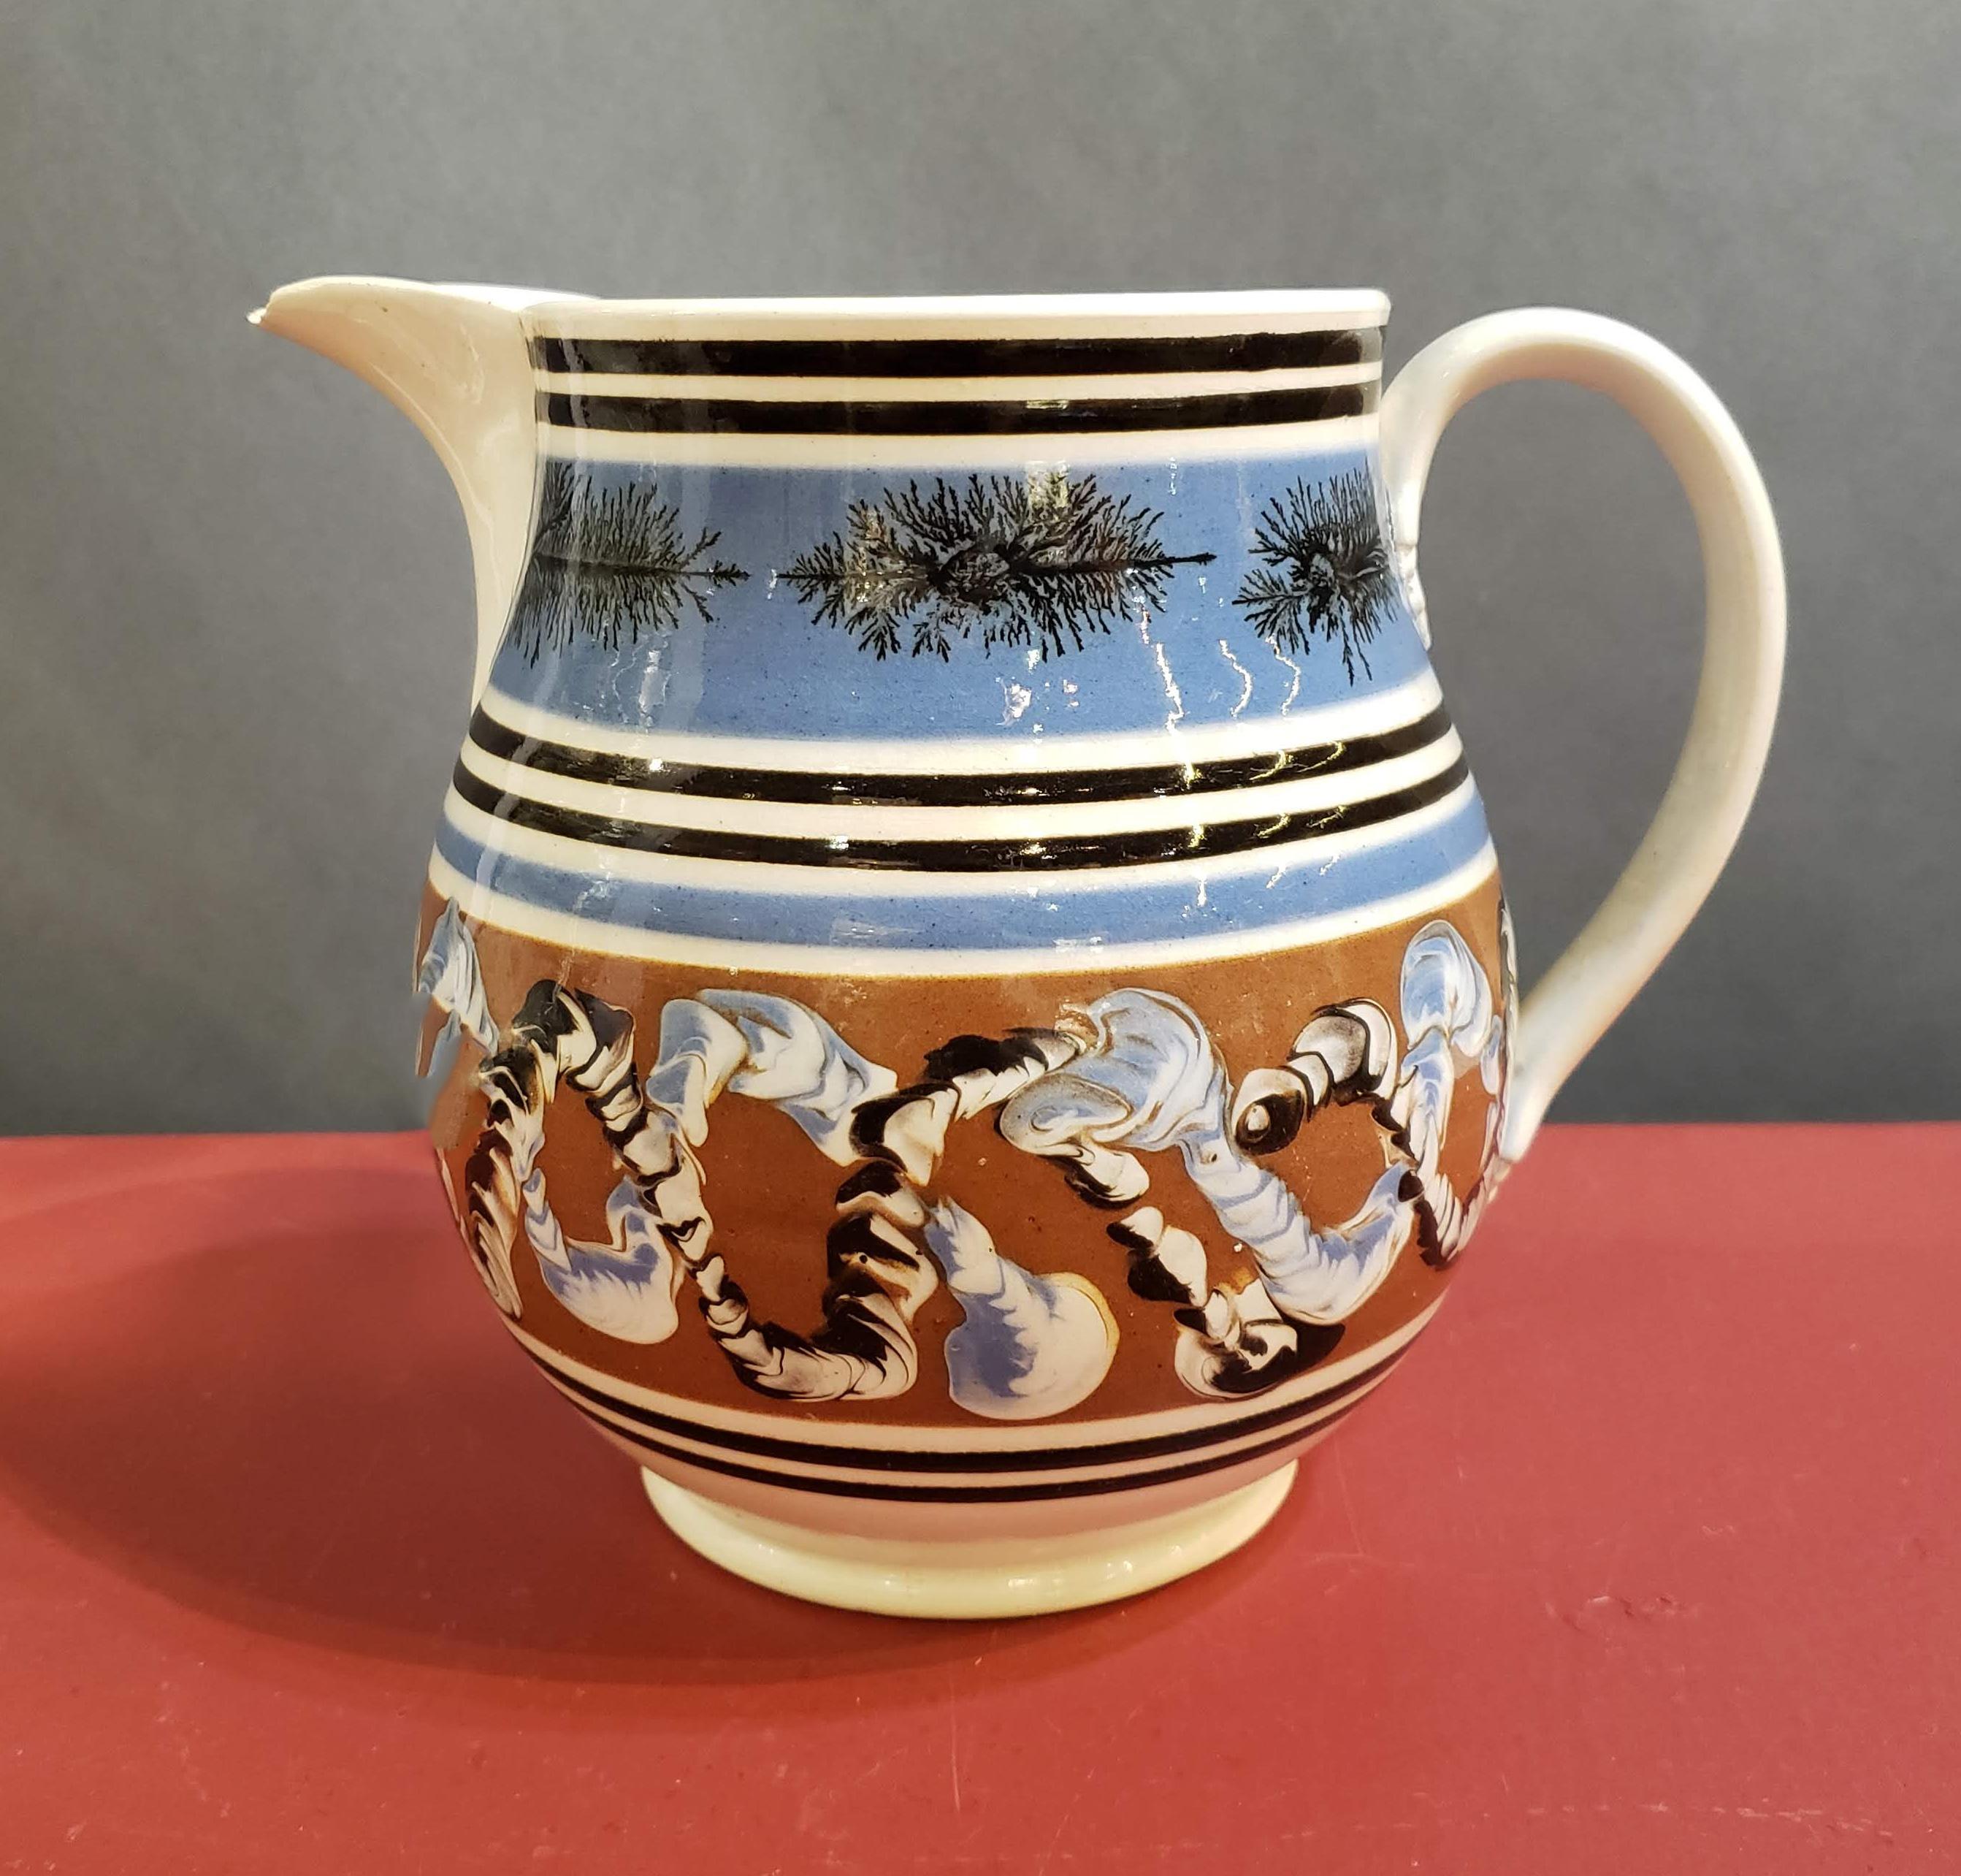 Ceramic Pearlware Pottery Mocha Jug with Seaweed and Earthworm Design, circa 1830